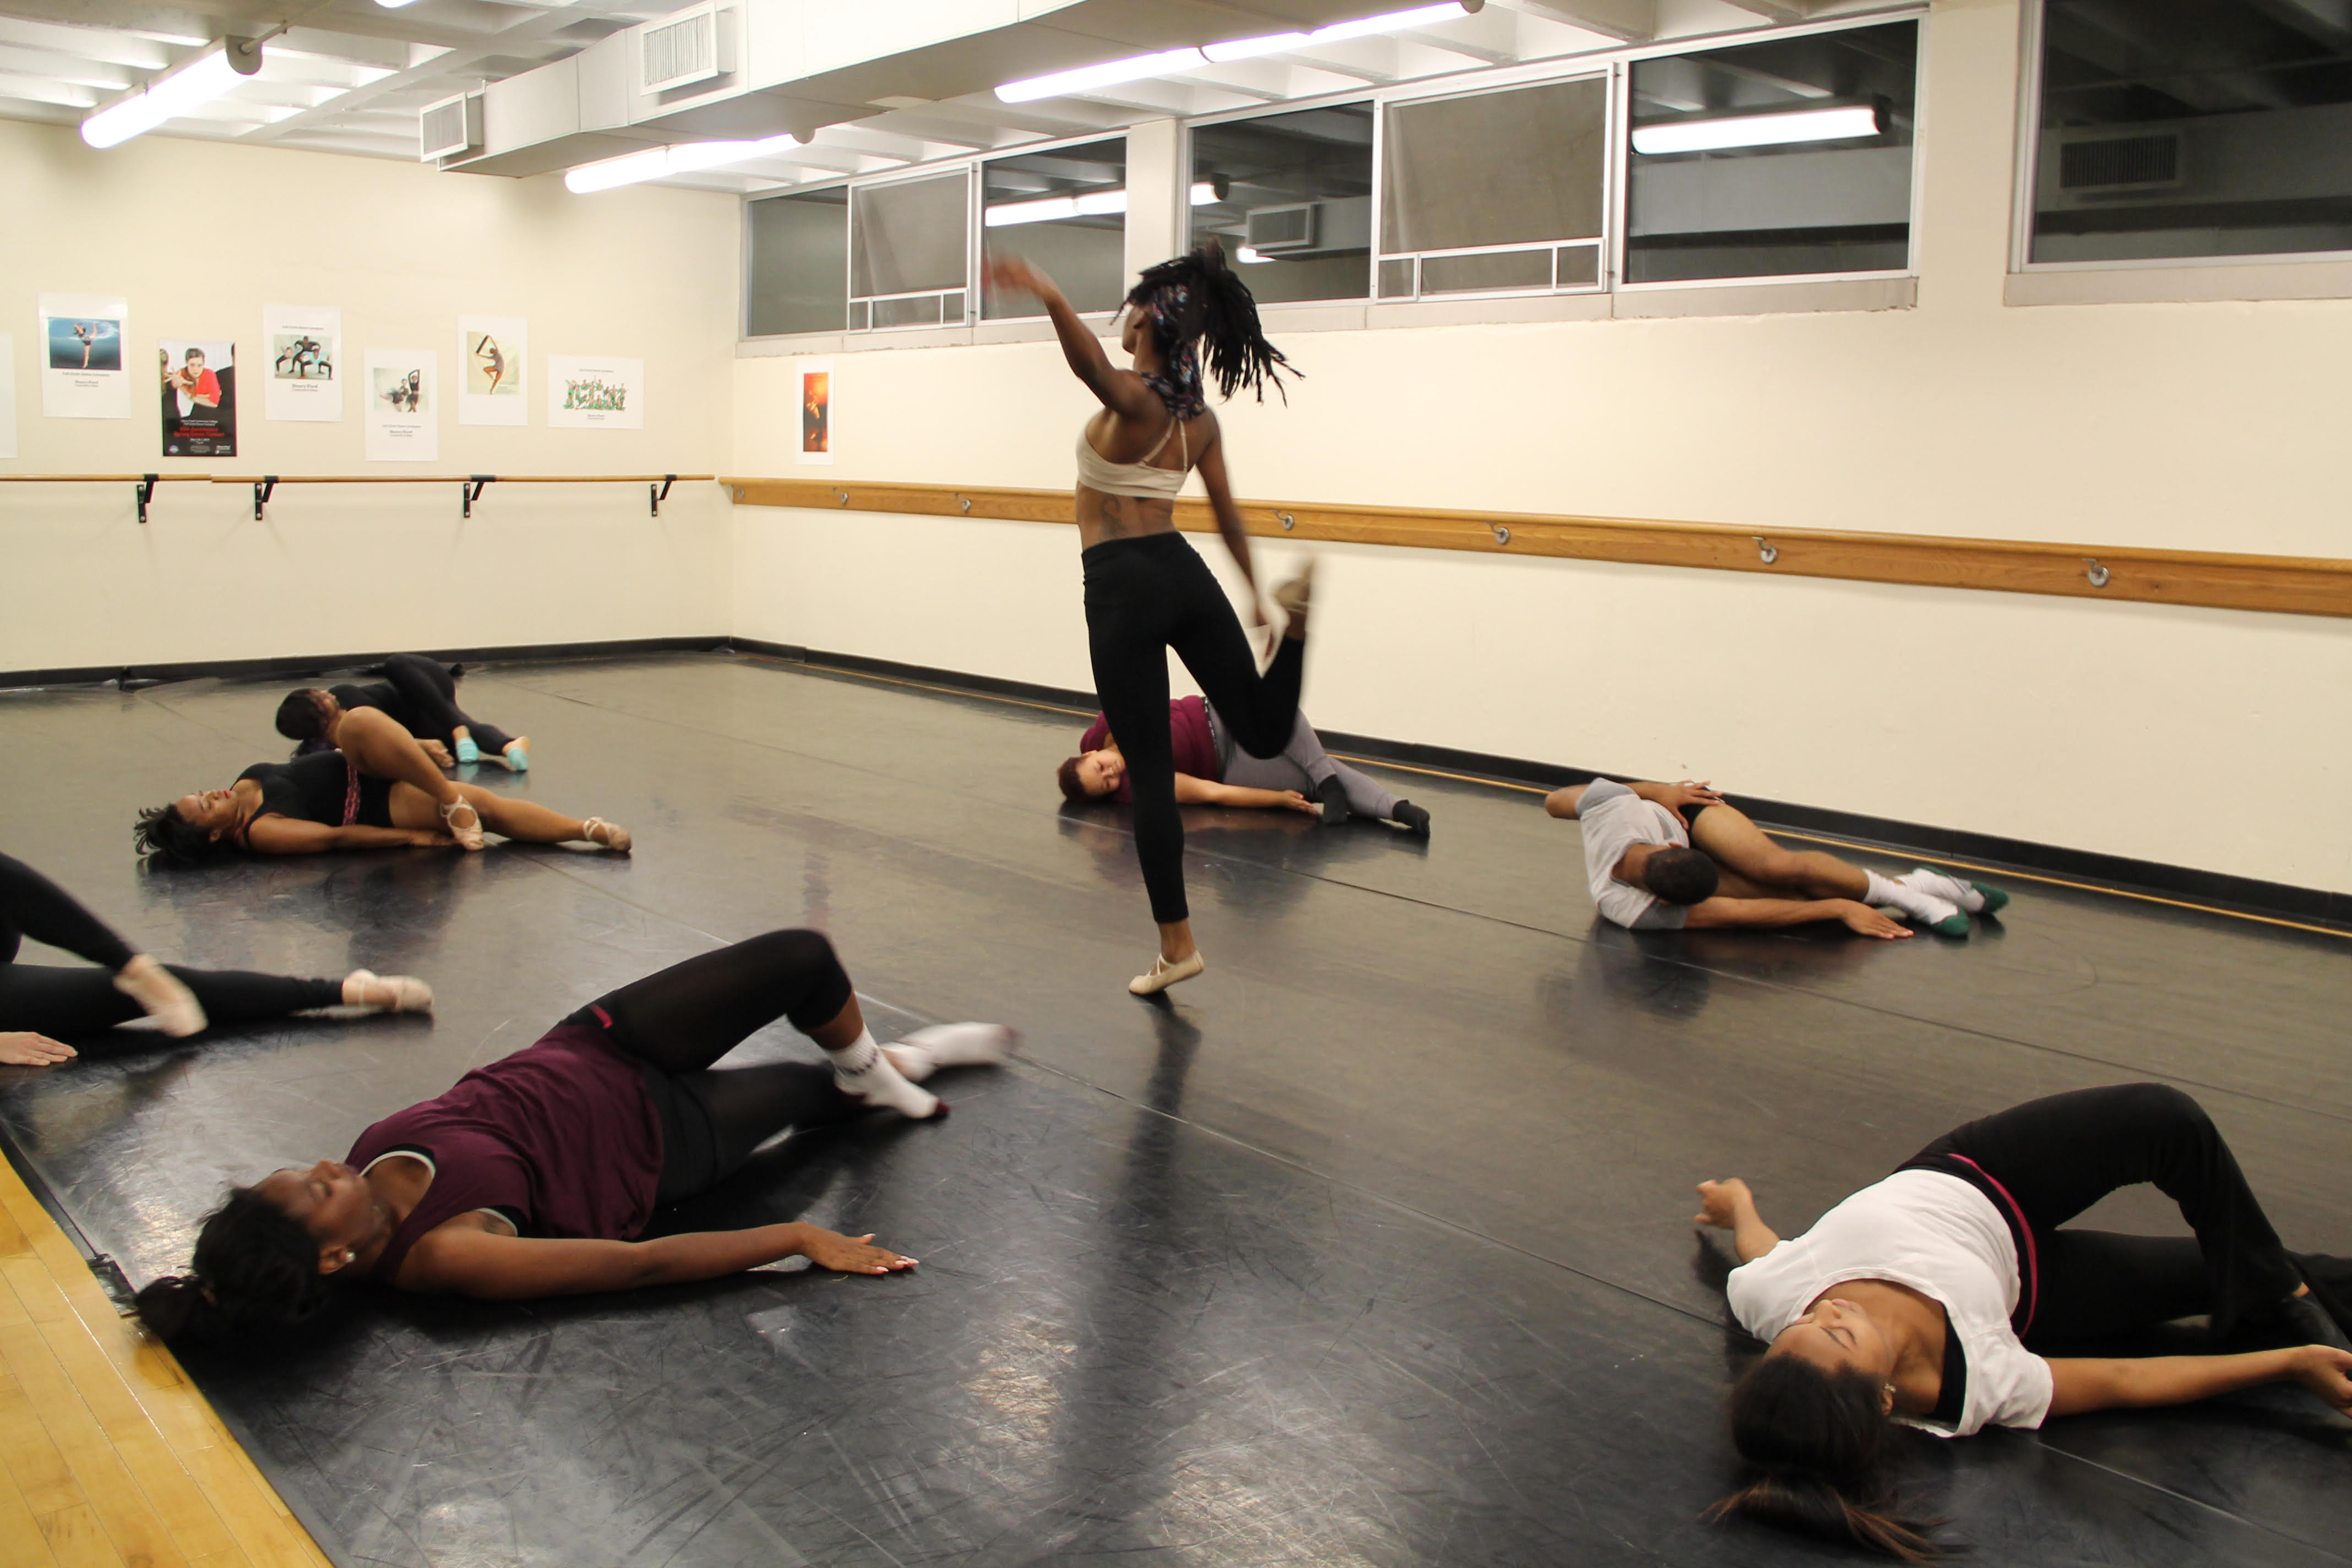 Dancers bending backward in circle around female dancer twirling on one leg in rehearsal studio.